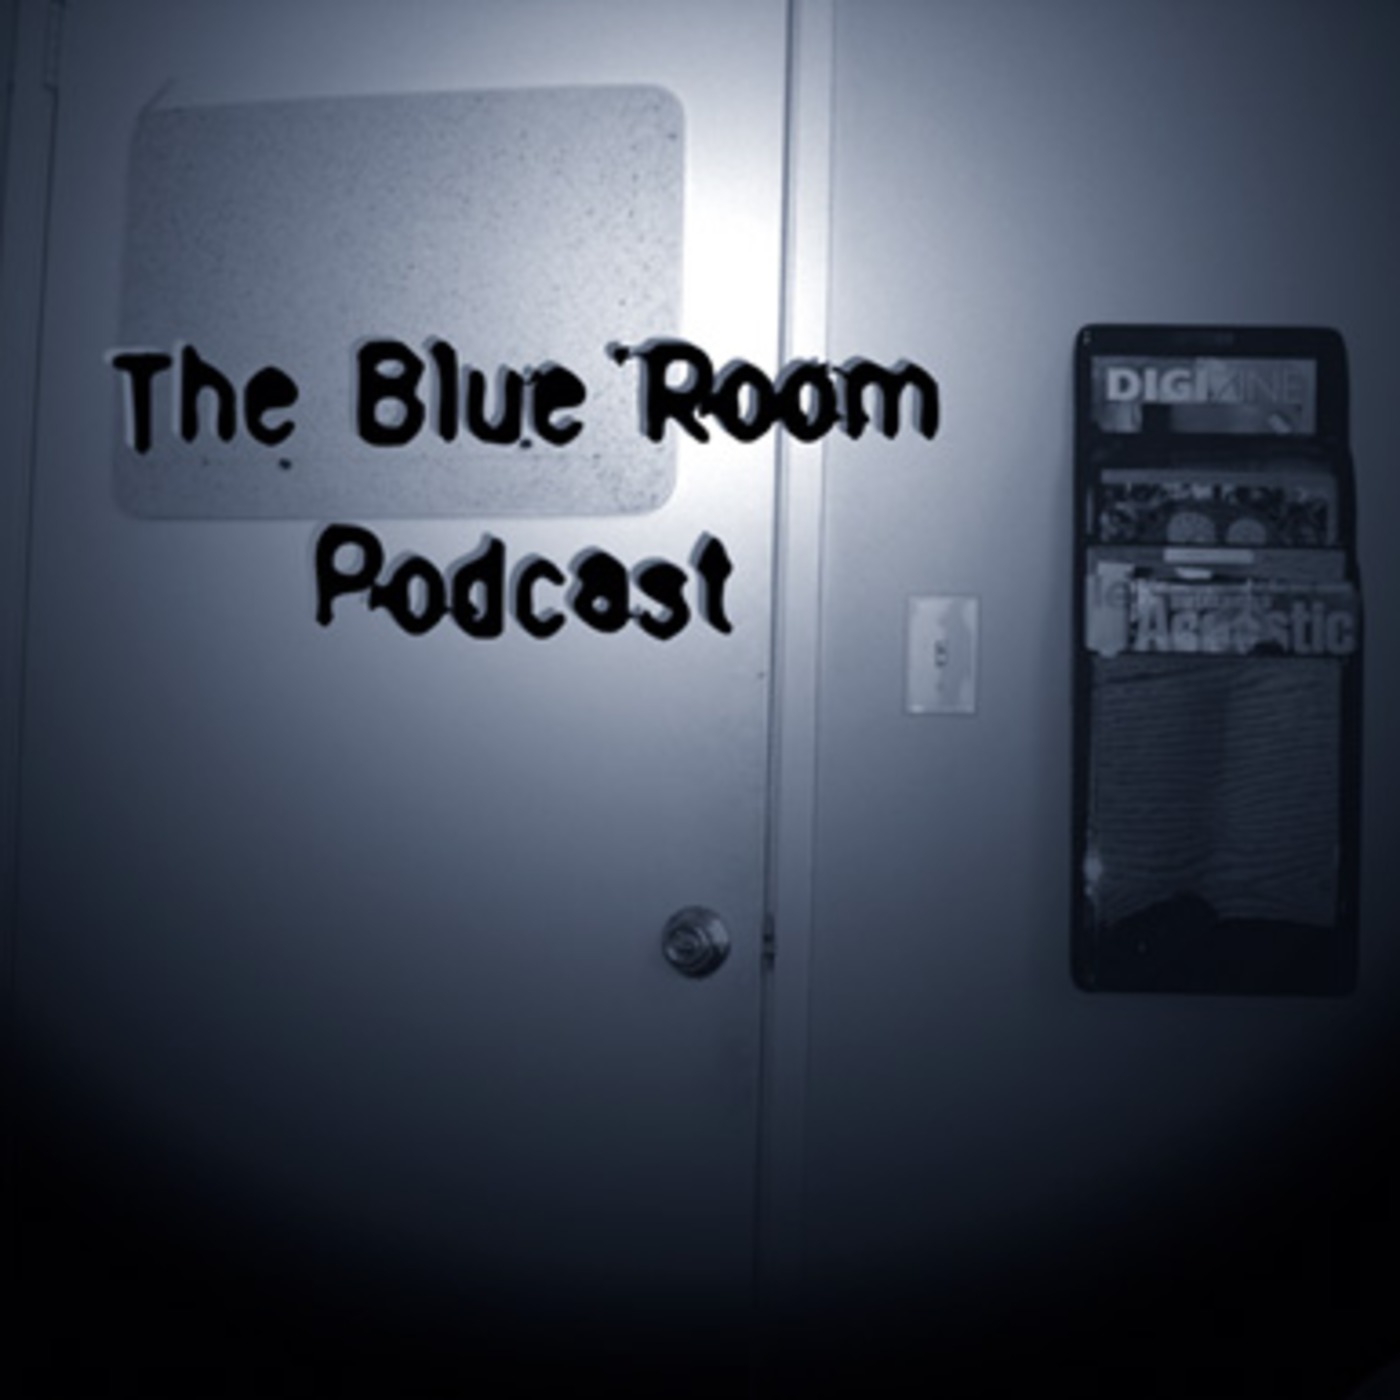 blueroom's podcast